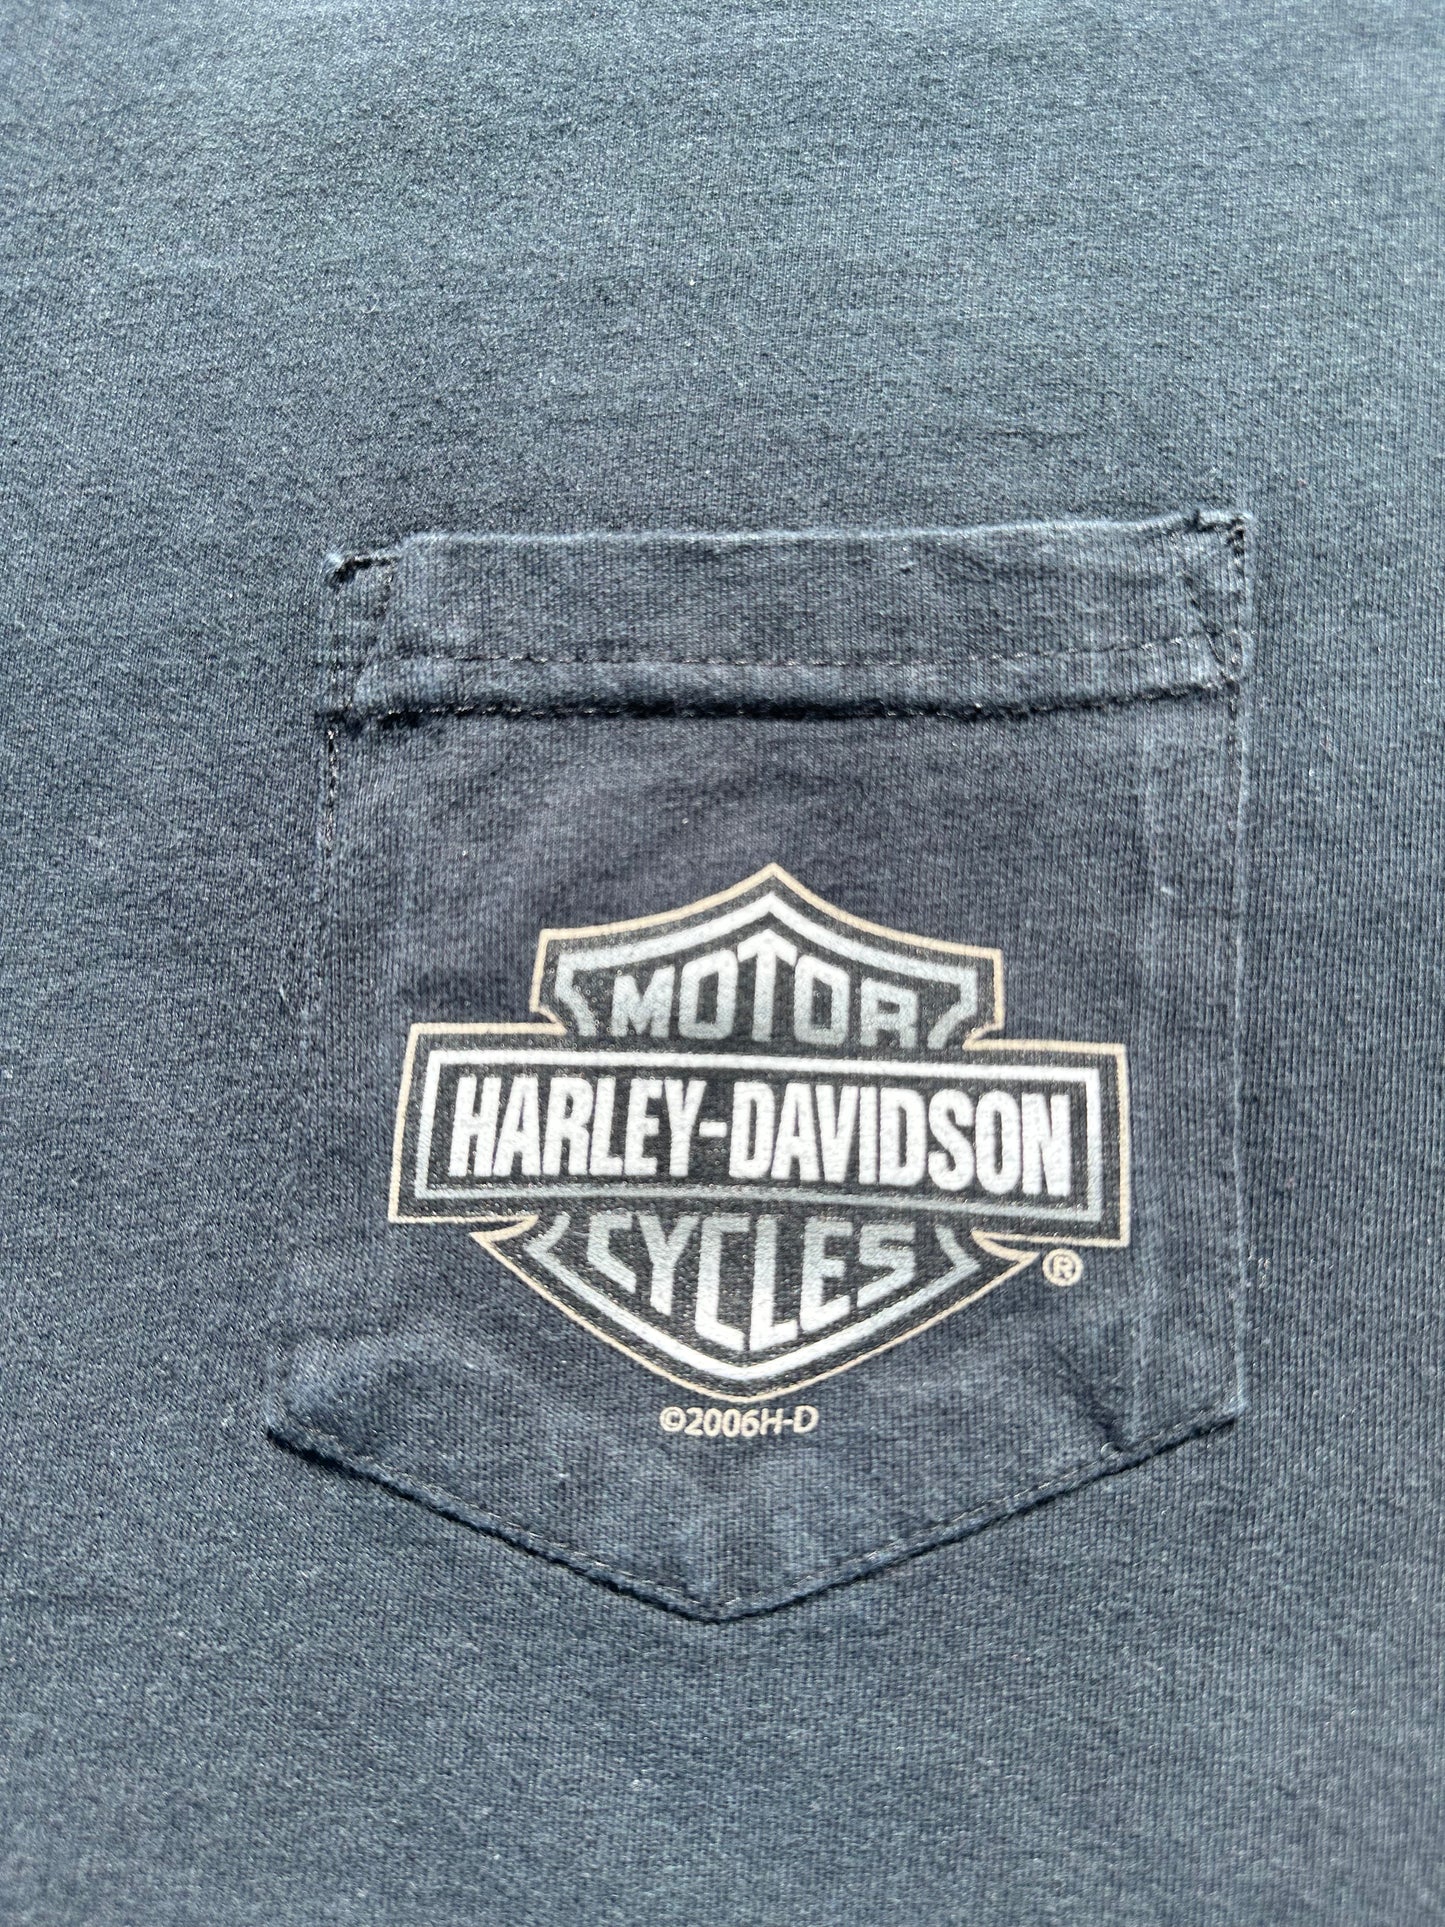 2006 Harley Davidson Cut Off